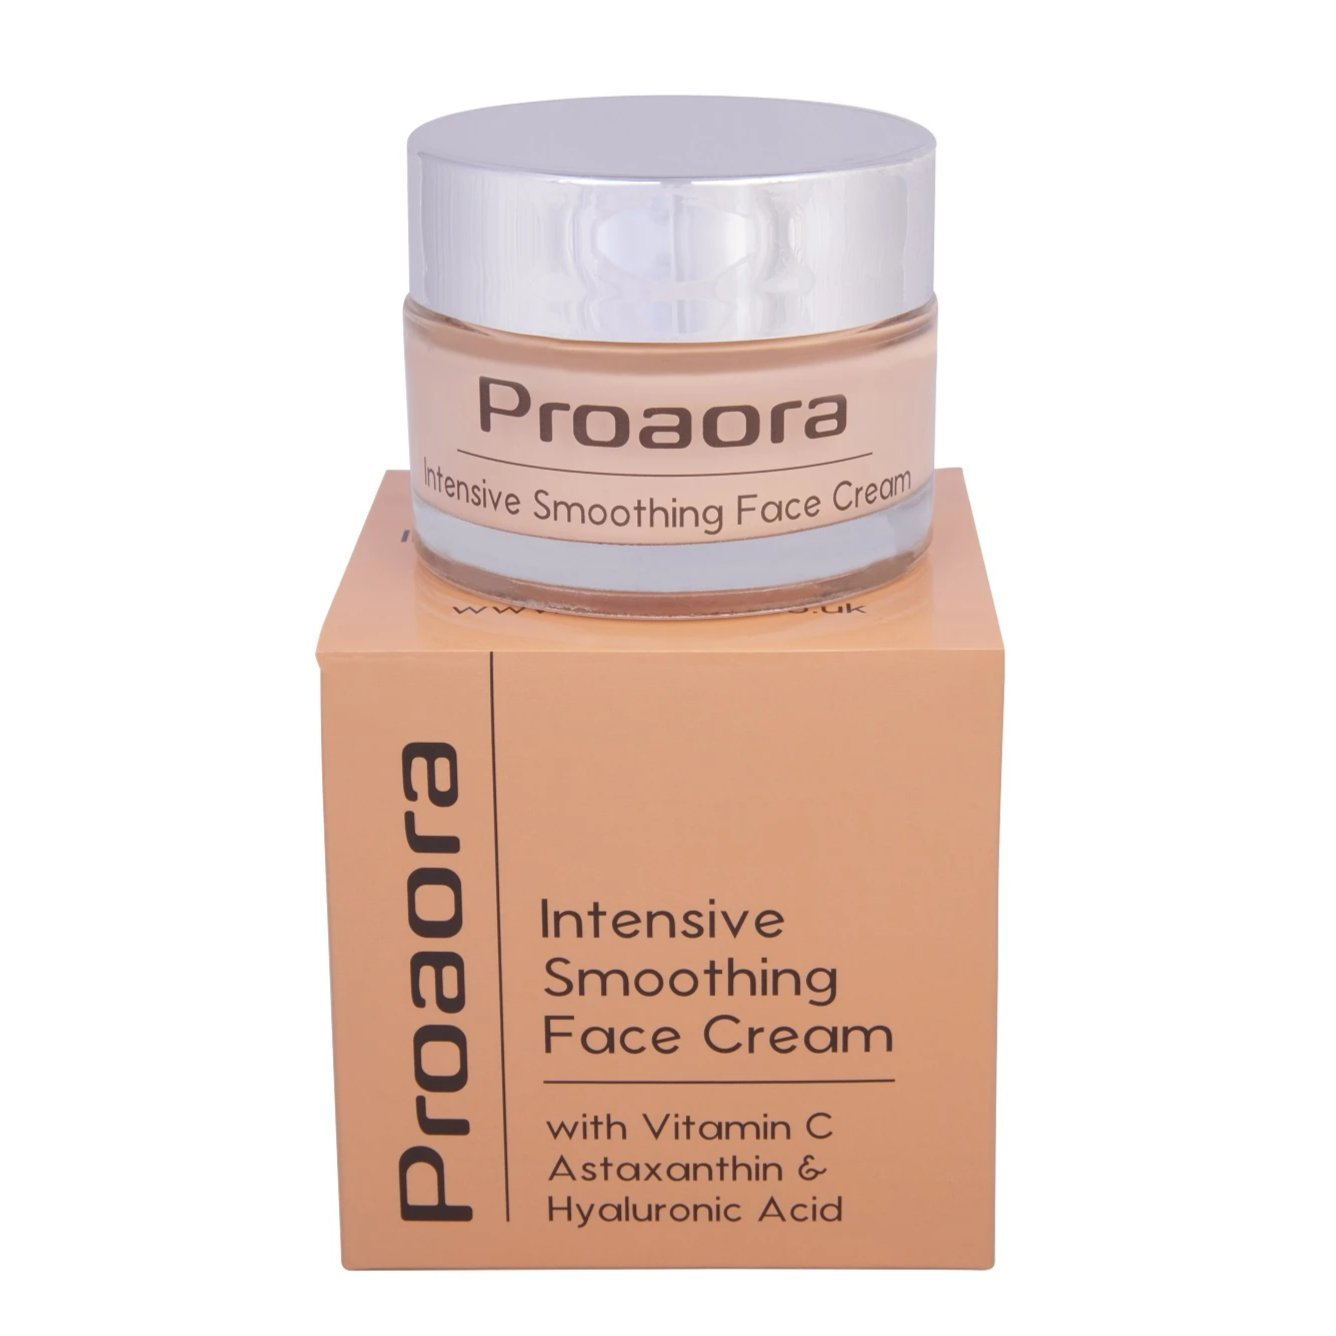 Proaora Night cream with Astaxanthin